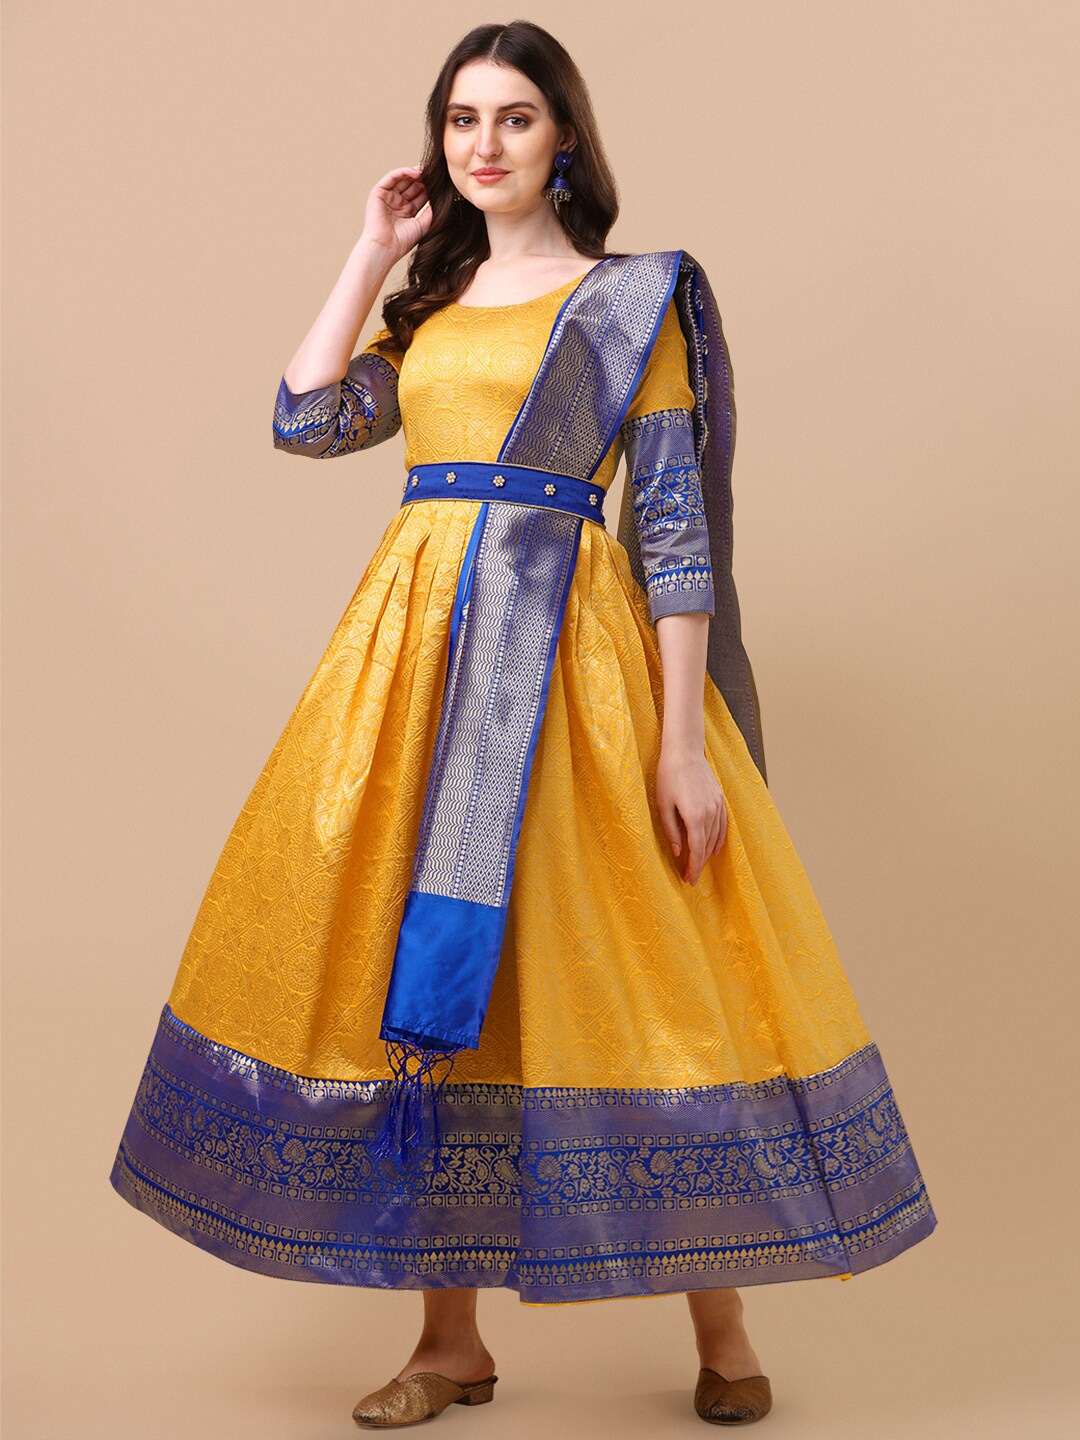 Vidraa Western Store Yellow & Blue Ethnic Motifs Jacquard Ethnic Maxi Dress Price in India